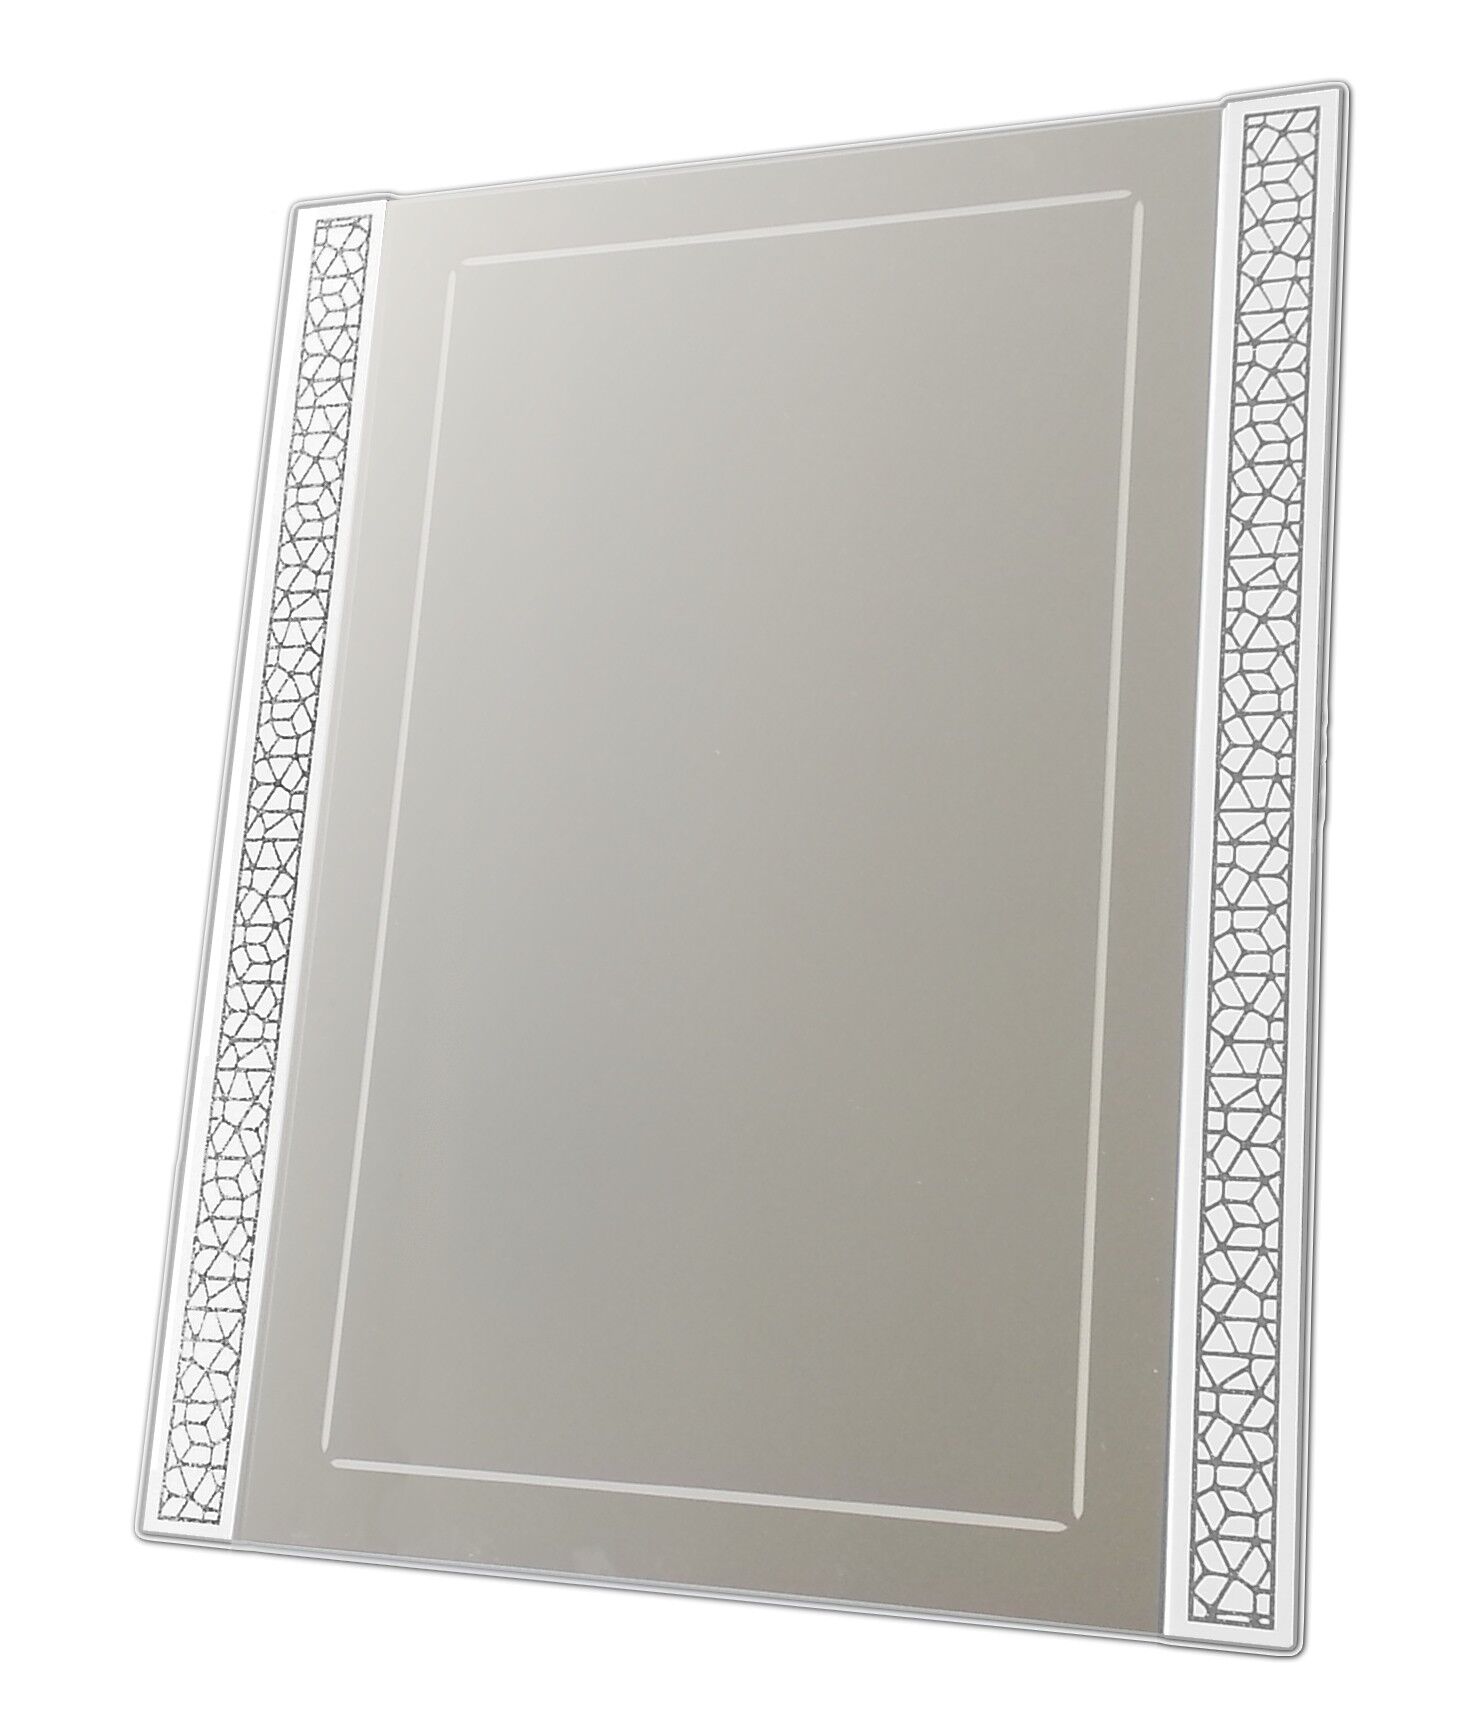 gdegdesign Miroir design blanc rectangulaire à motifs brillants - Steed